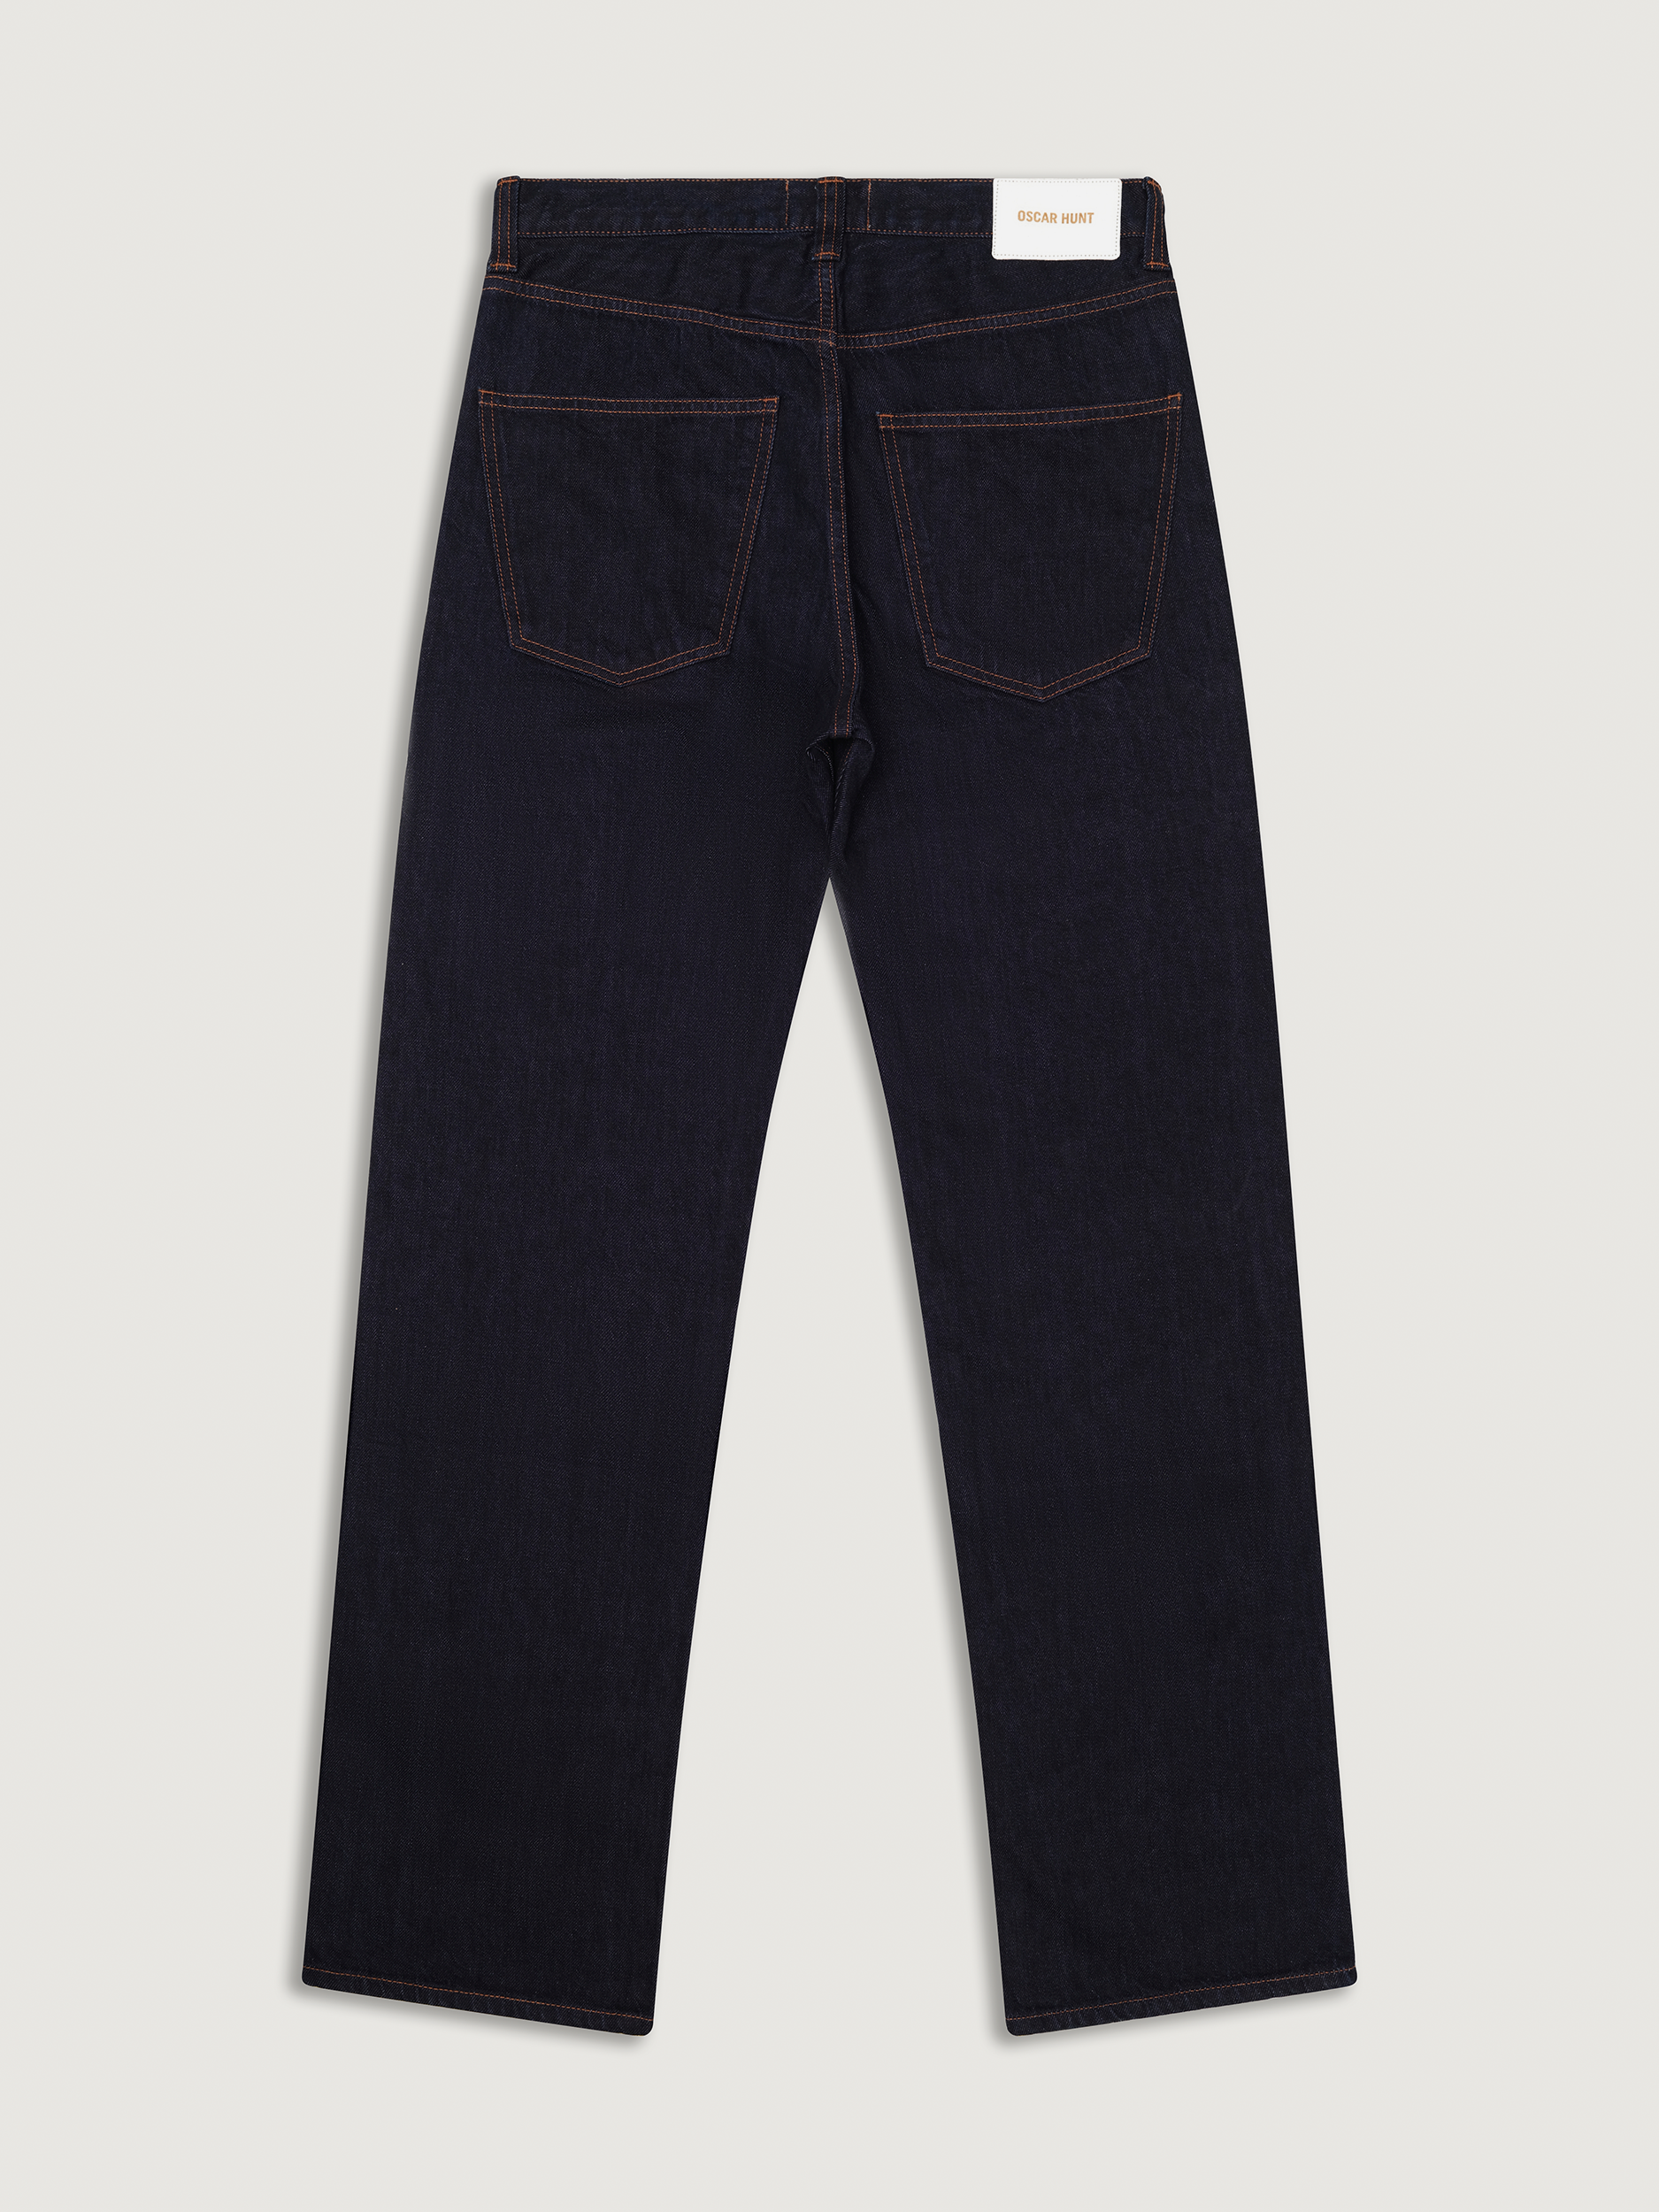 Men's Jeans PNG Image | Jeans png, Brown pants outfit, Pants design